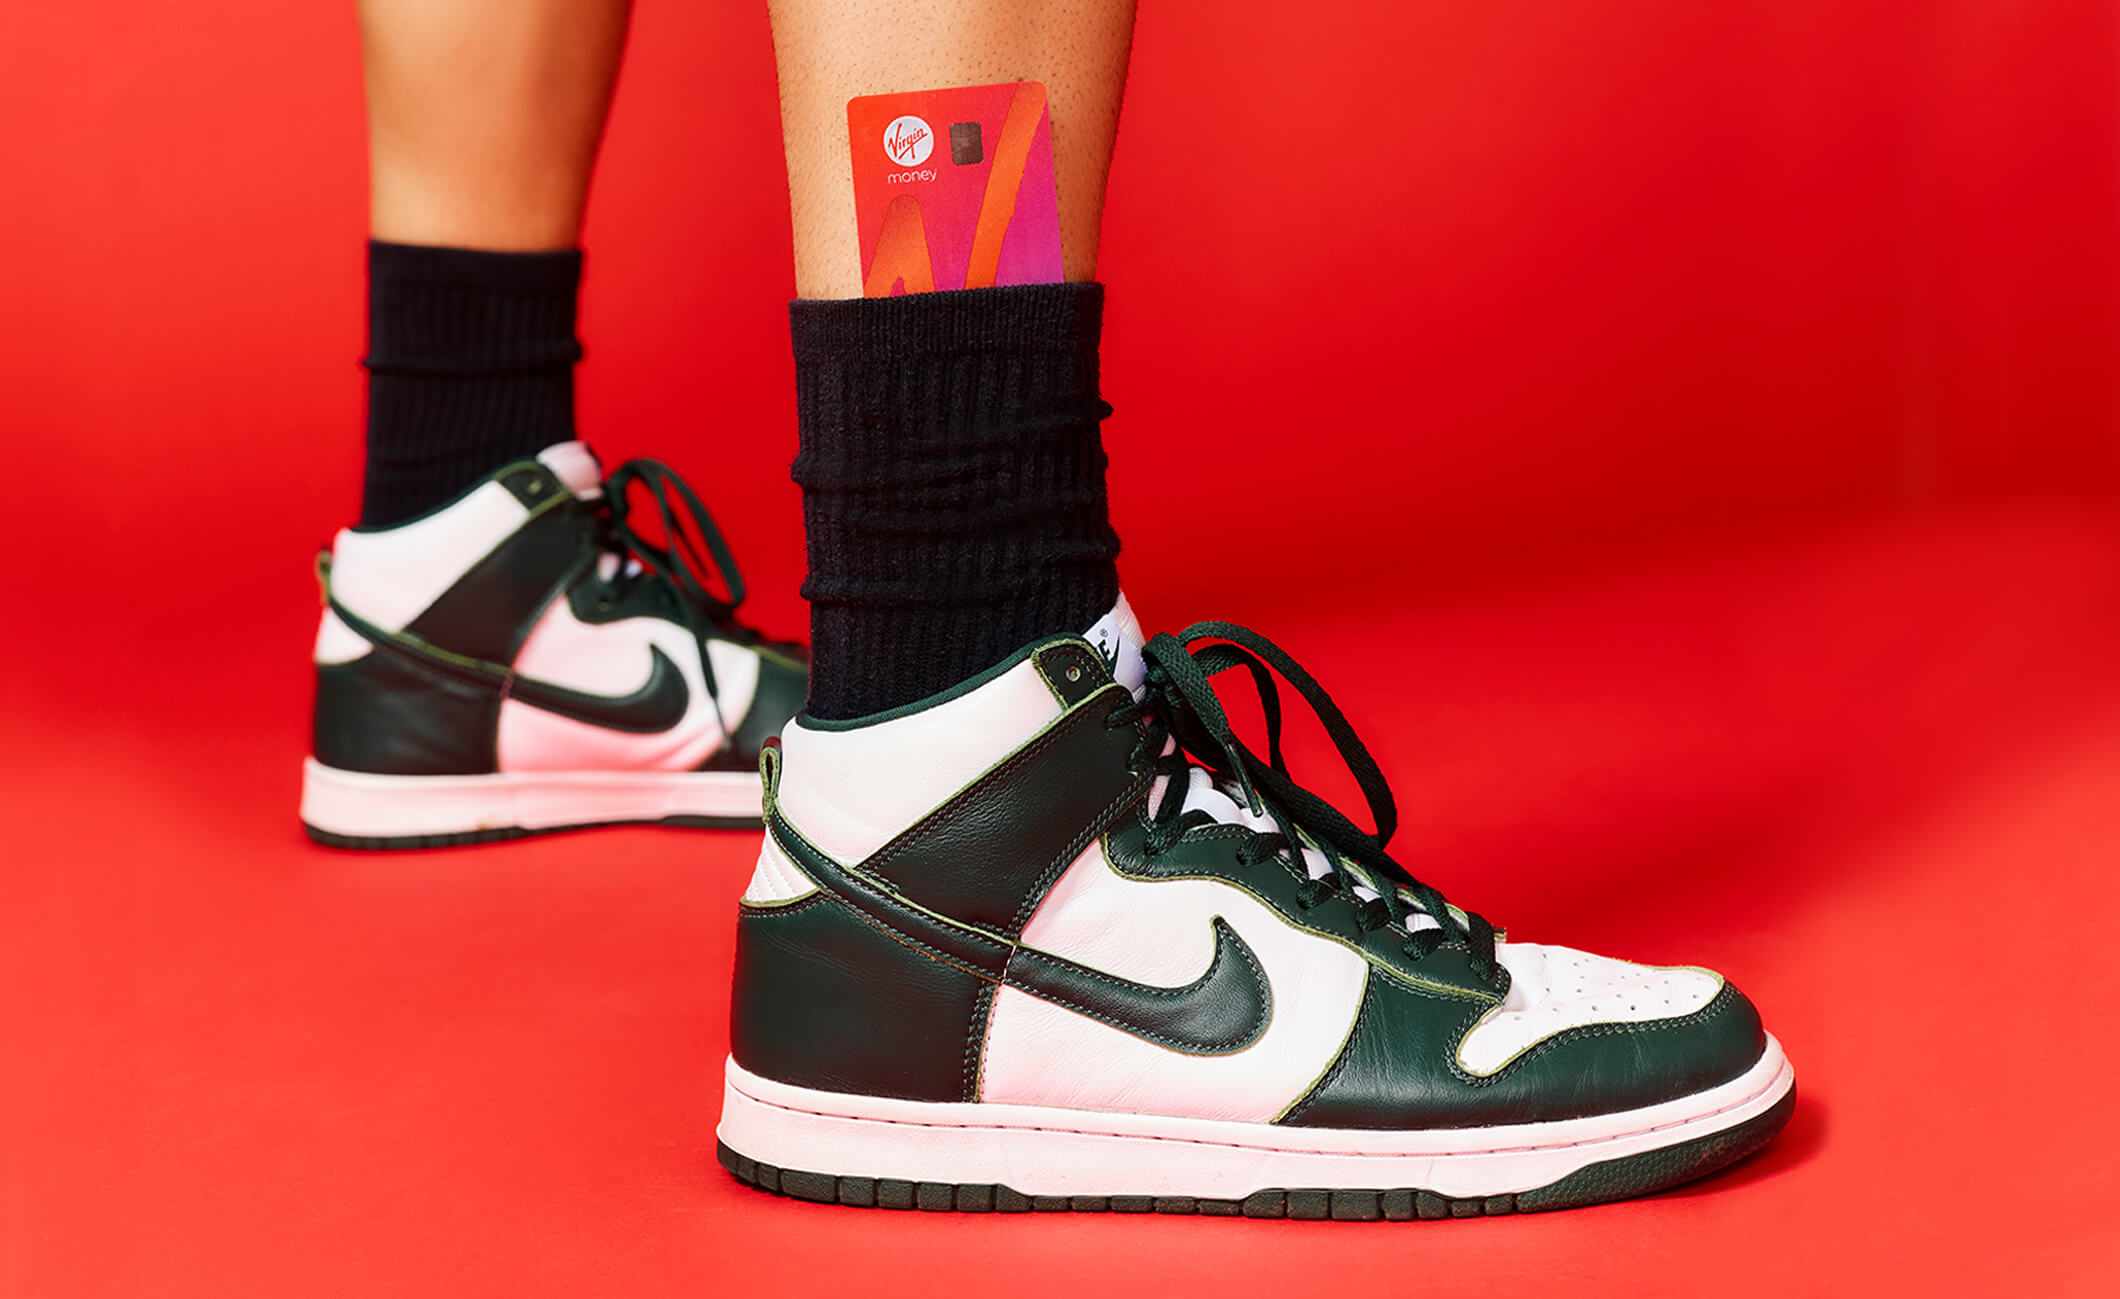 Male leg wearing Nike shoe with Virgin Money card tucked into sock.